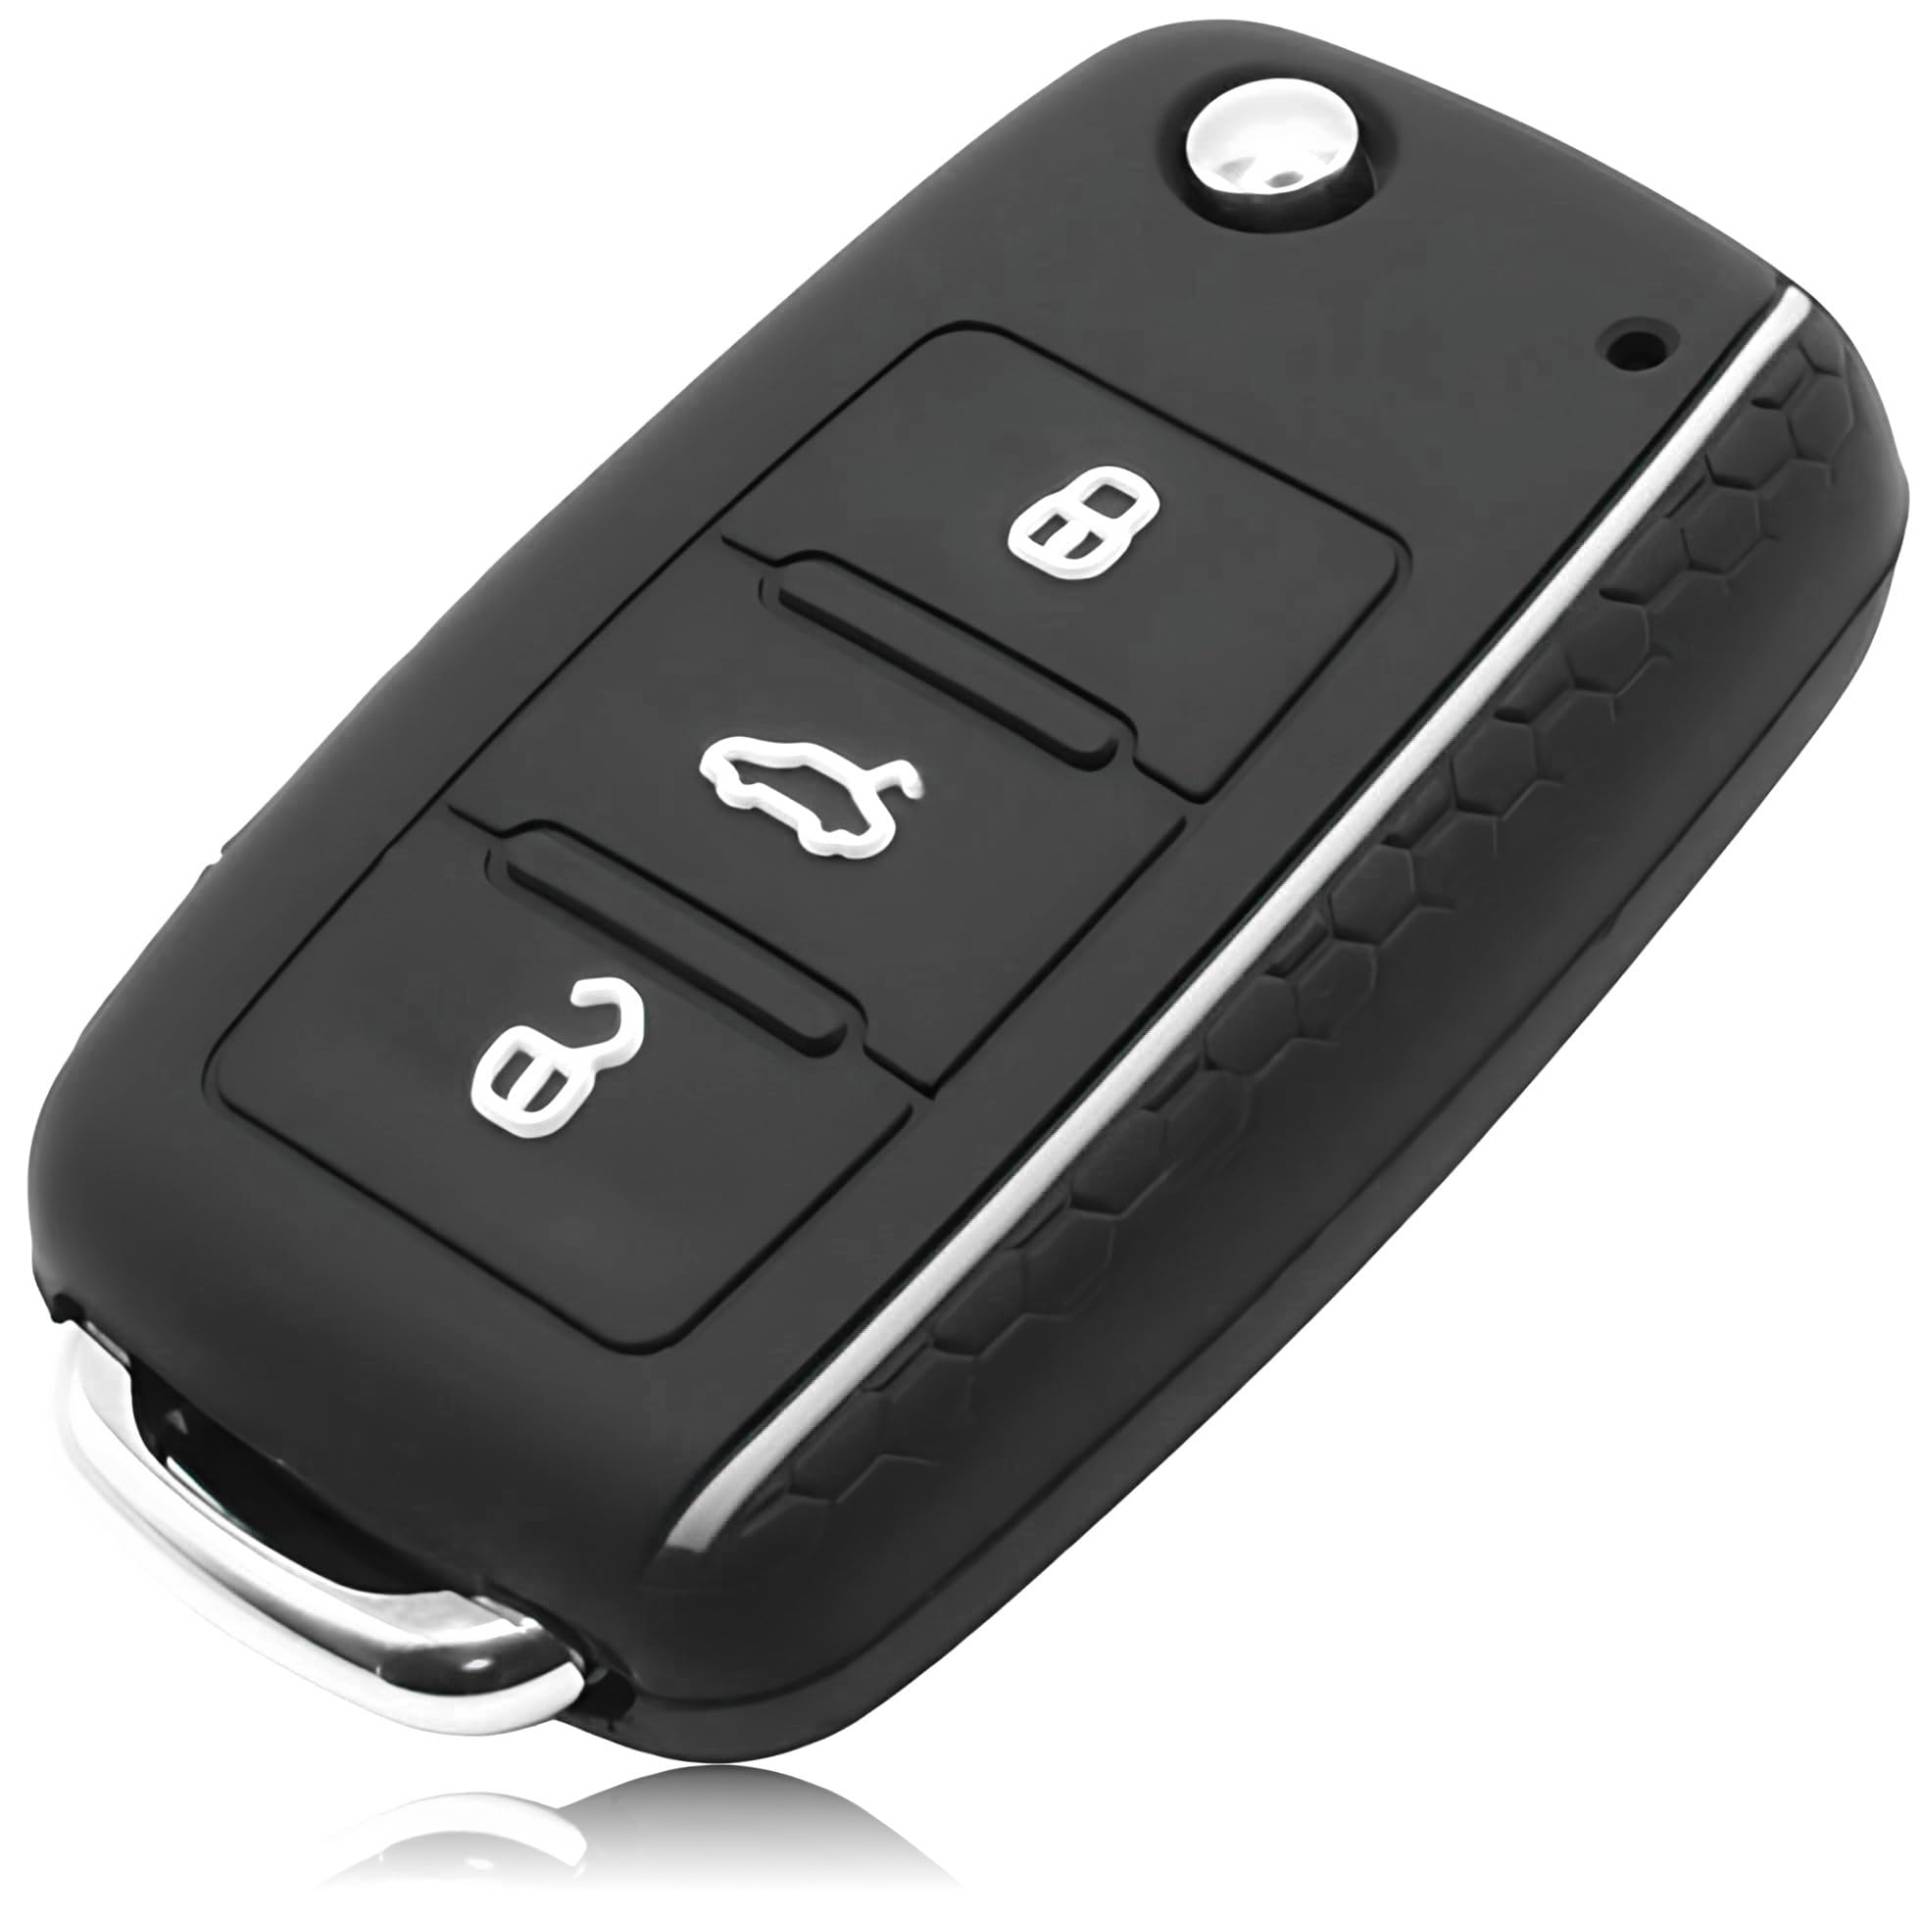 FOAMO Autoschlüssel Hülle Kompatibel mit VW Golf 6, SEAT, SKODA Autoschlüssel Silikon-Hülle Schlüssel-Hülle Schutz-Hülle für Autoschlüssel schwarz-weiß von FOAMO